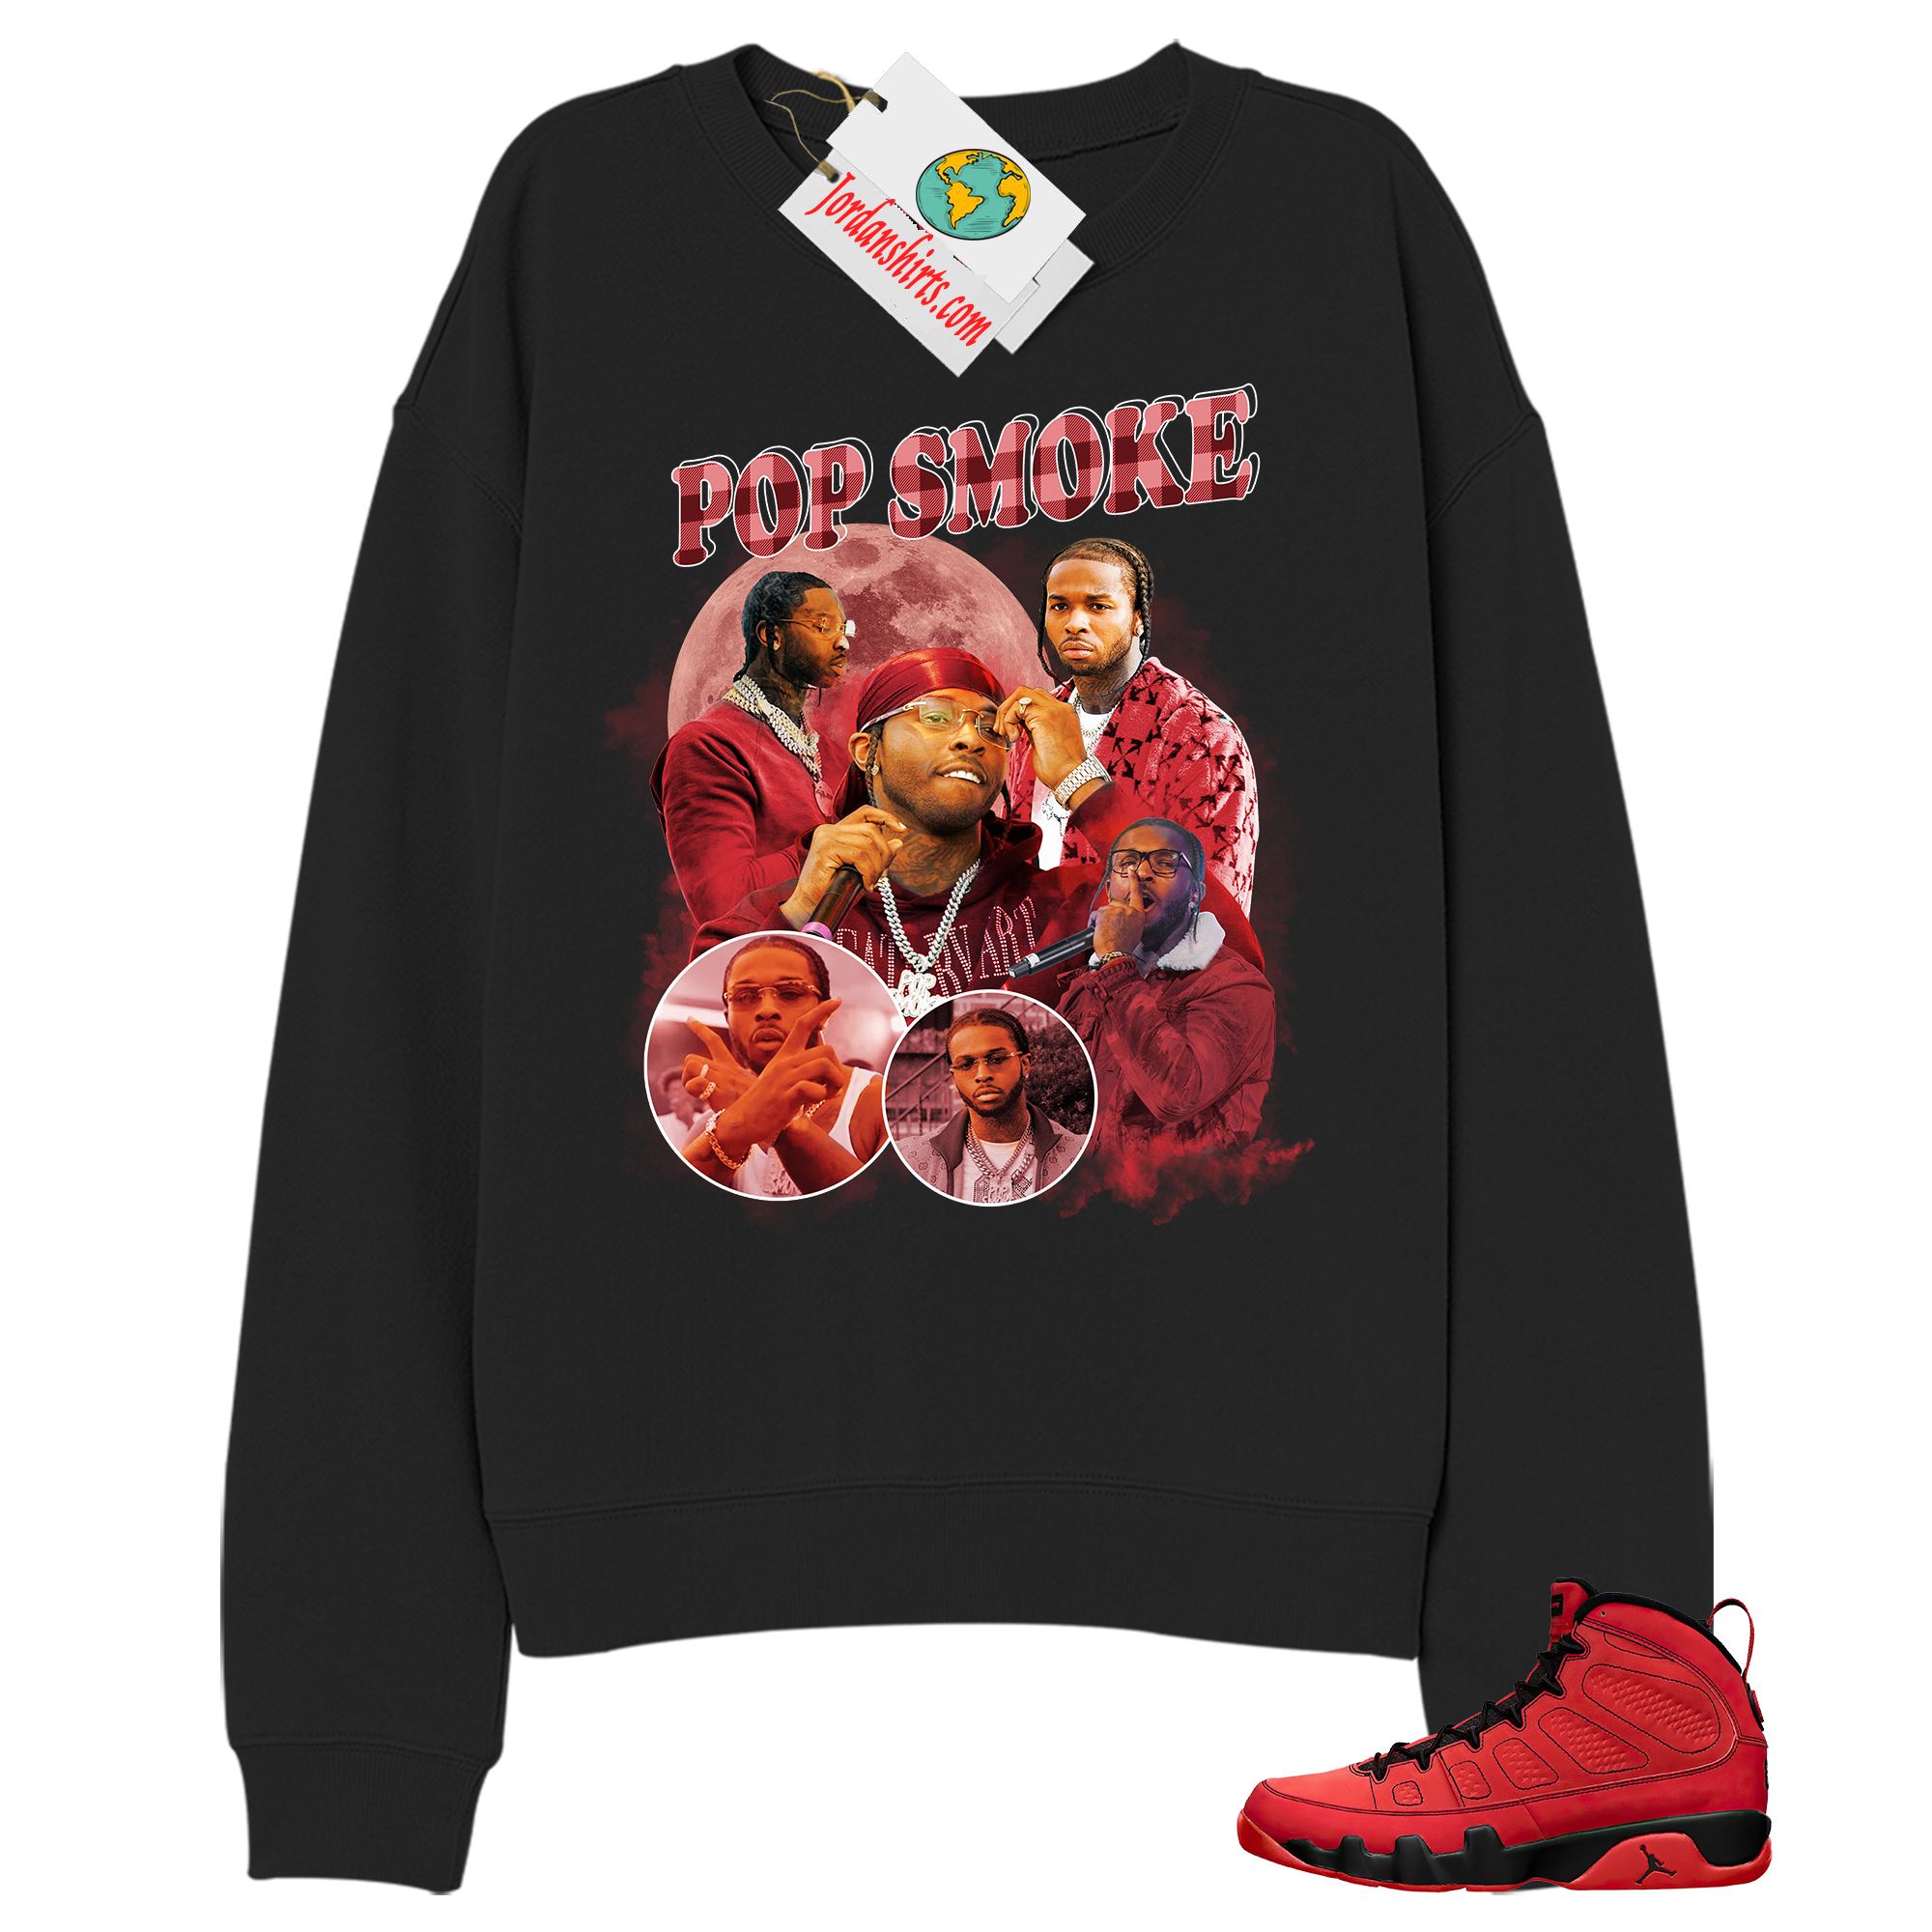 Jordan 9 Sweatshirt, Pop Smoke Bootleg Vintage Raptee Black Sweatshirt Air Jordan 9 Chile Red 9s Full Size Up To 5xl